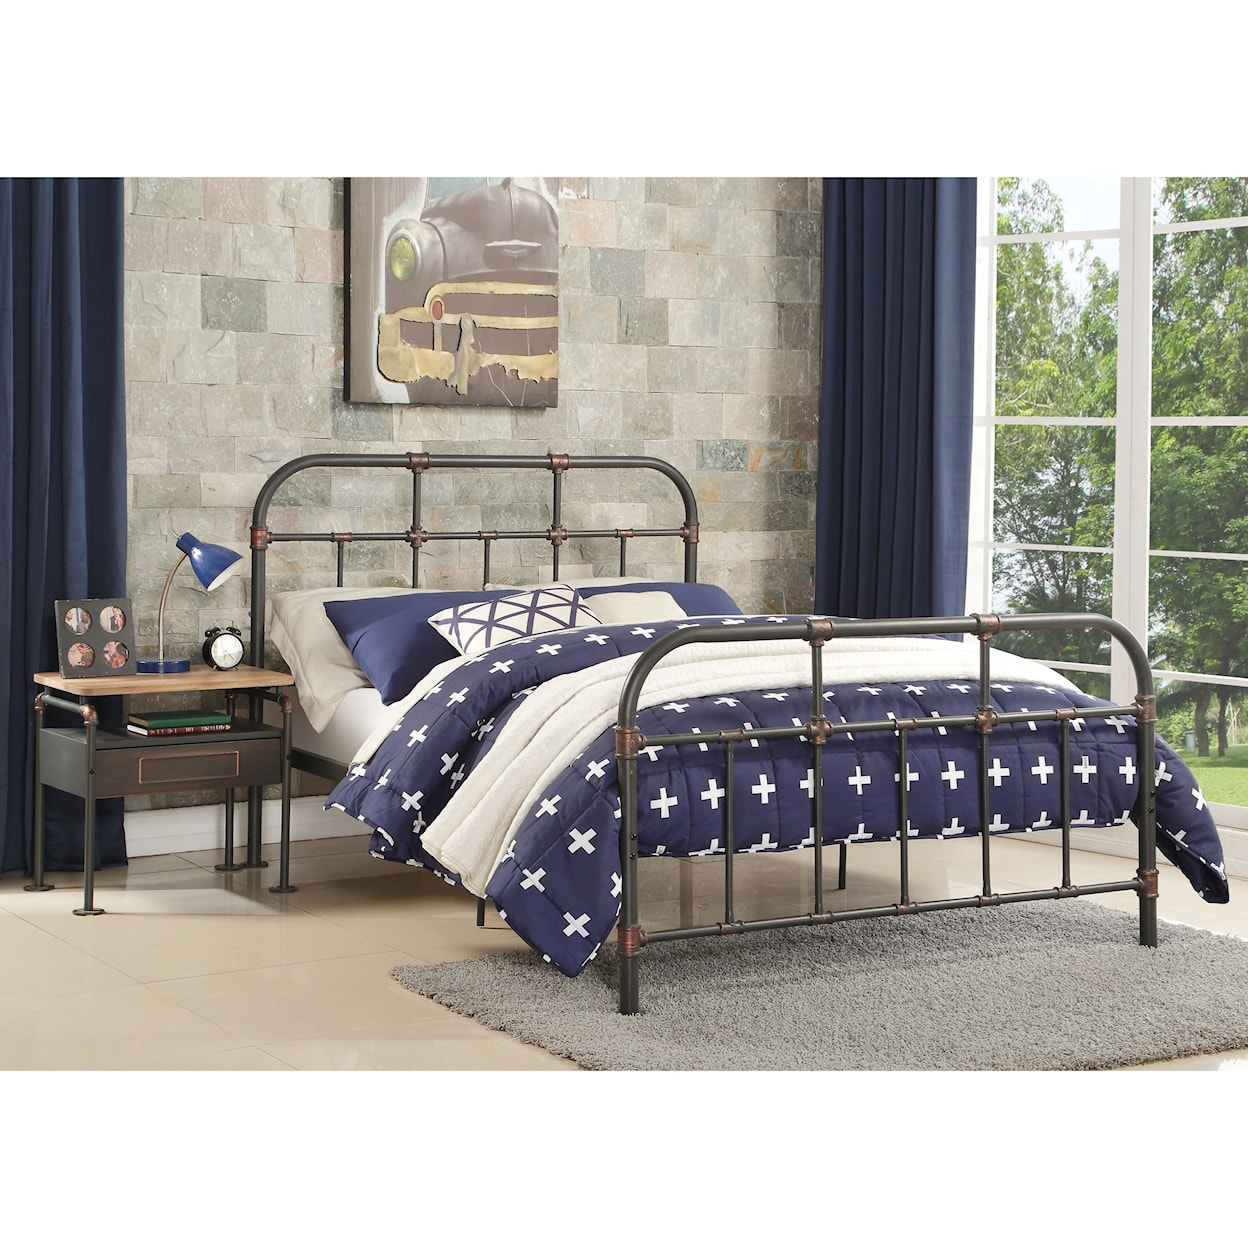 Acme Furniture Nicipolis Twin Bed